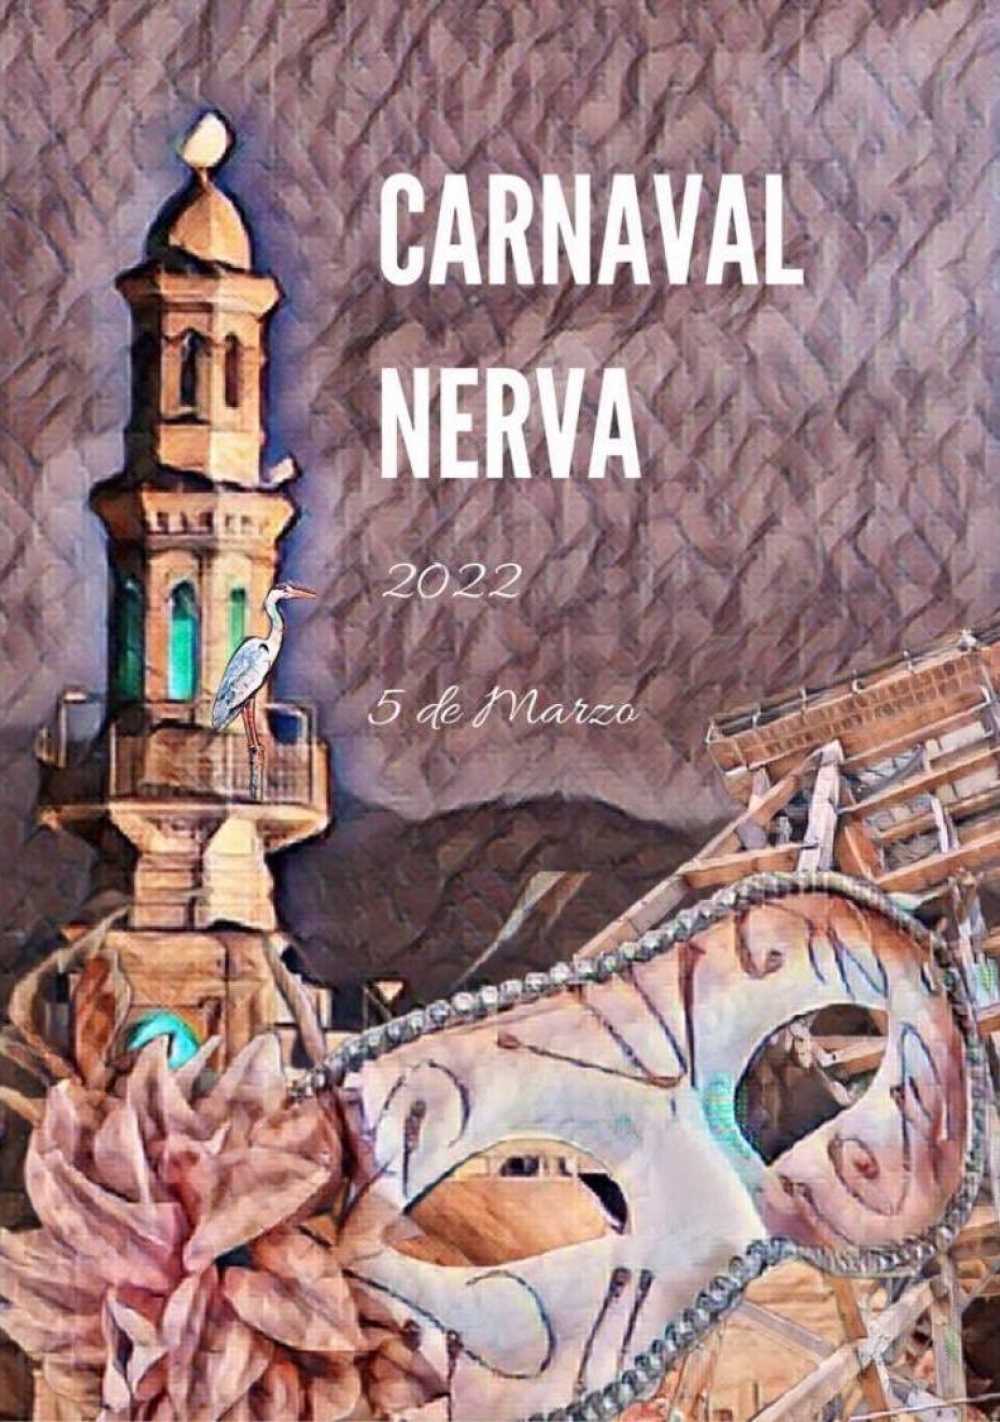 Carnaval Nerva 2022